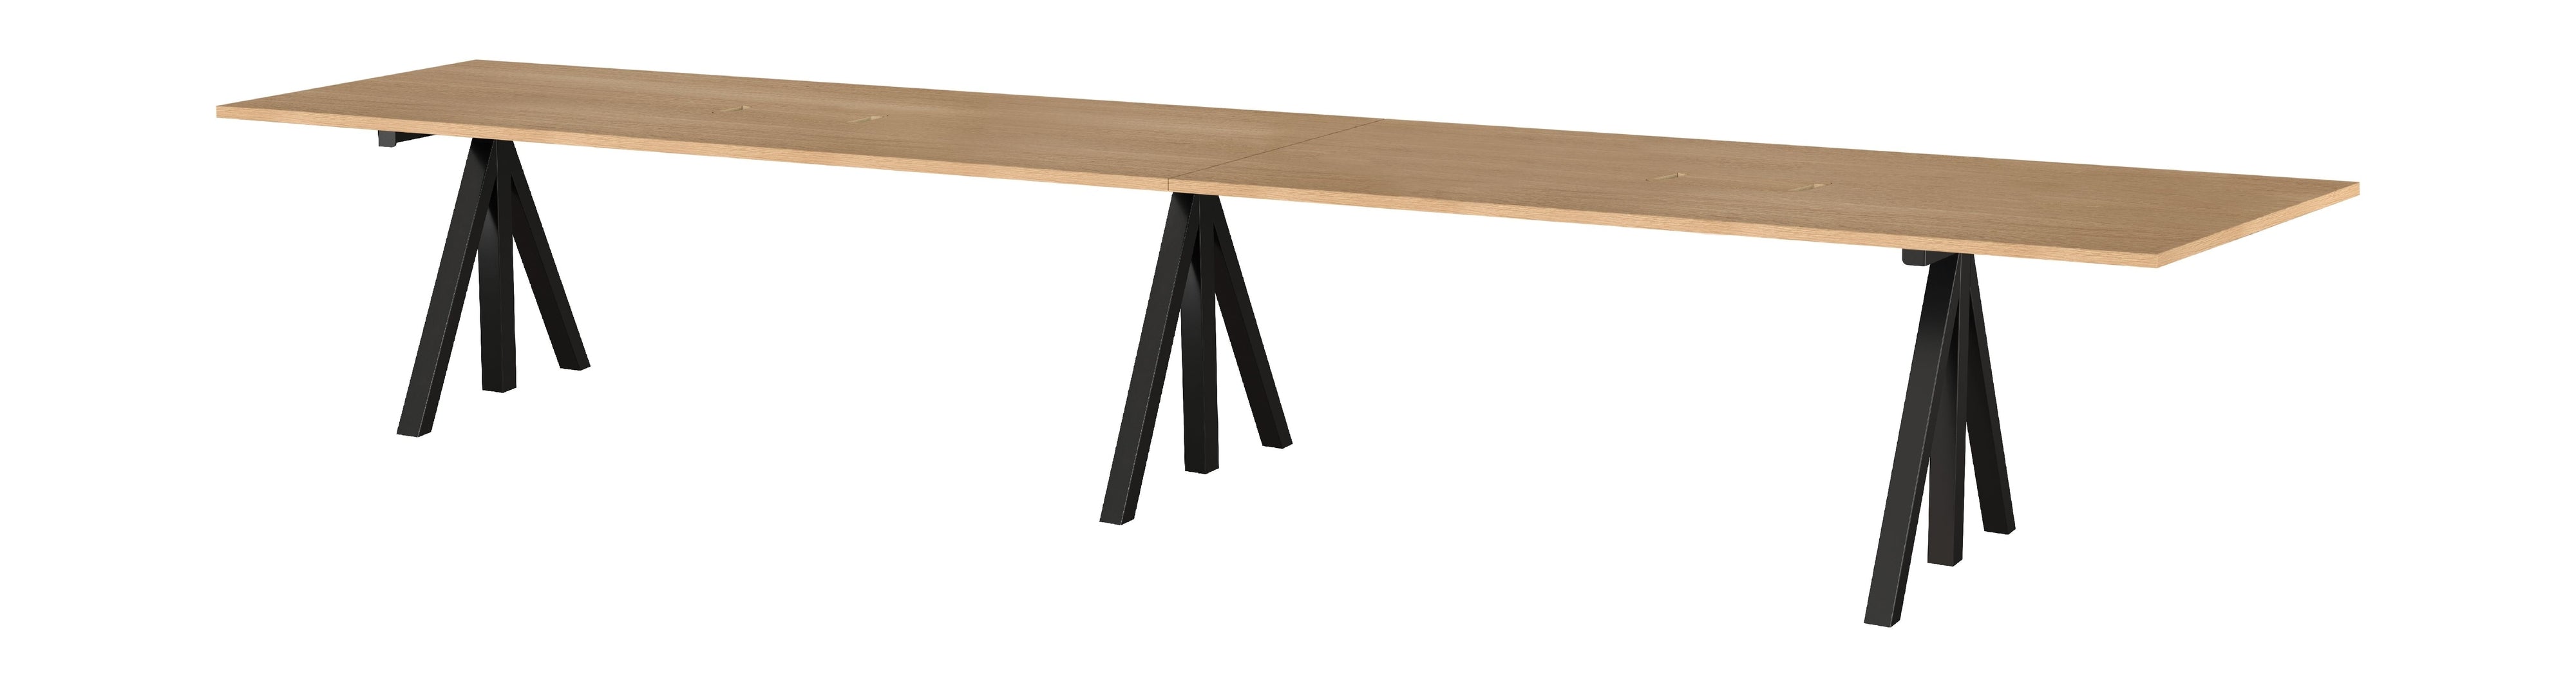 String Furniture Fungerar höjd justerbar möte tabell 90x180 cm, ek/svart